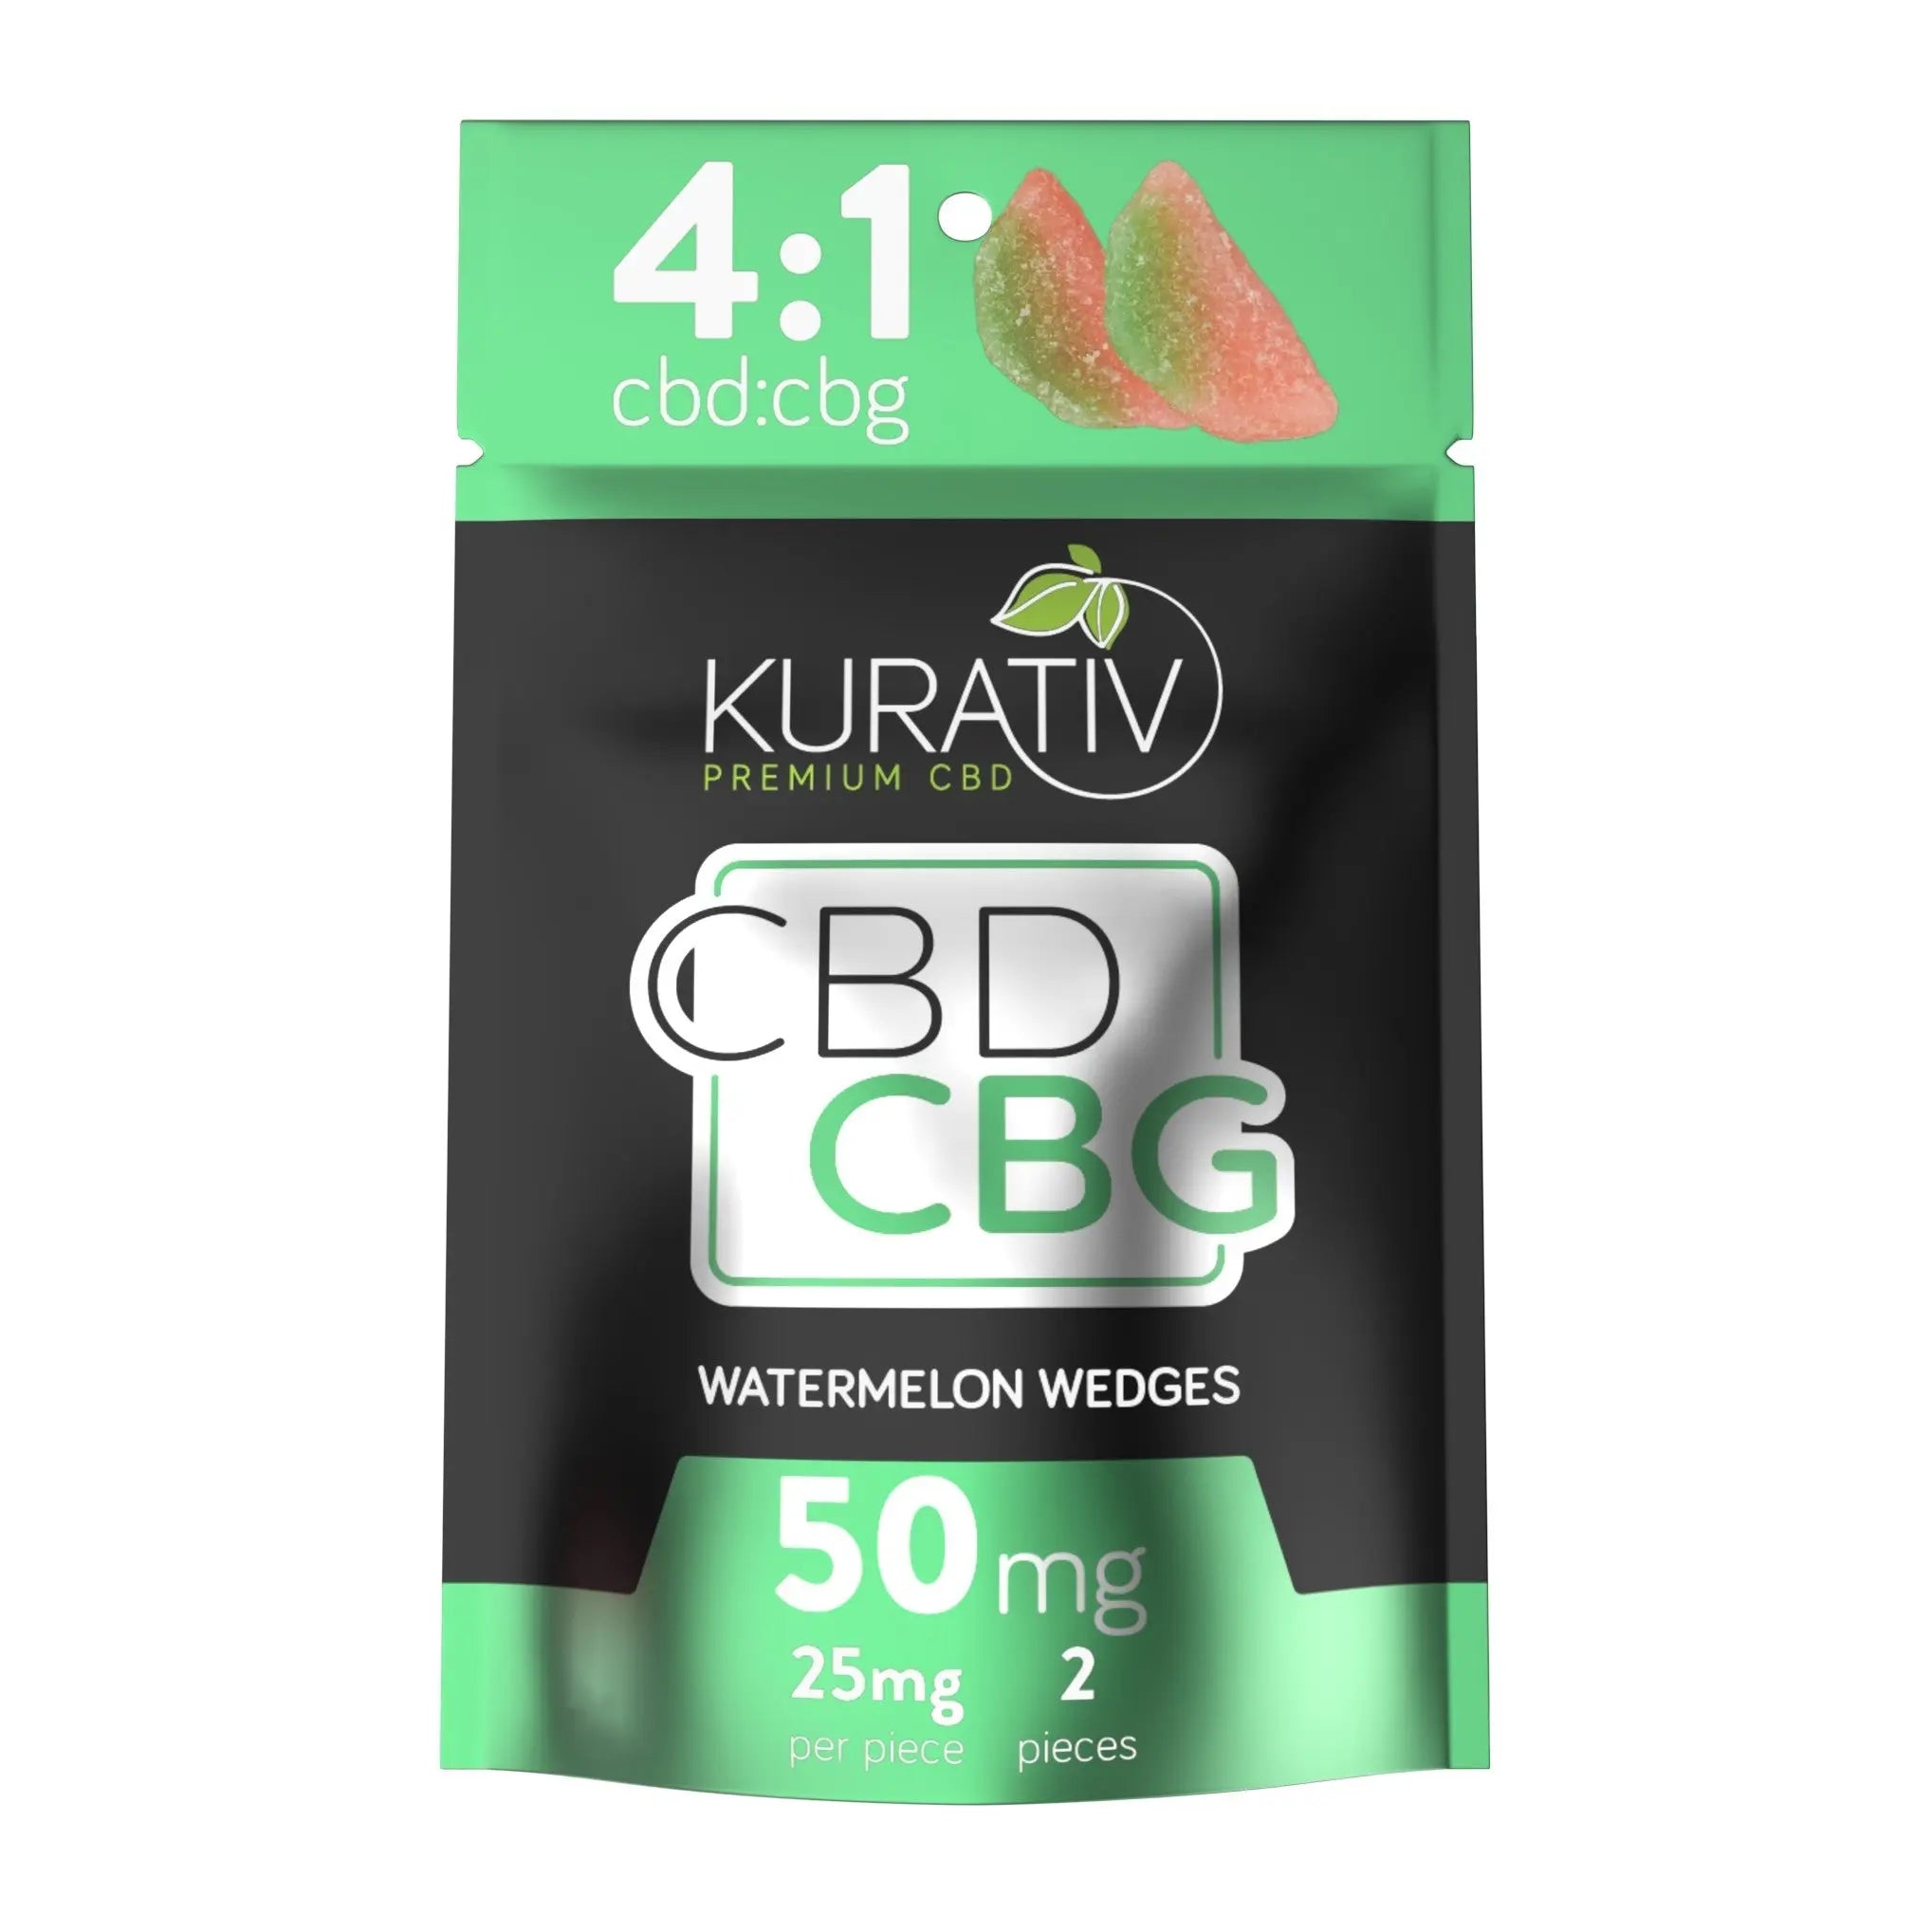 Full Spectrum CBG Watermelon Wedges 50mg (2-pack) $5.99 - Kurativ 